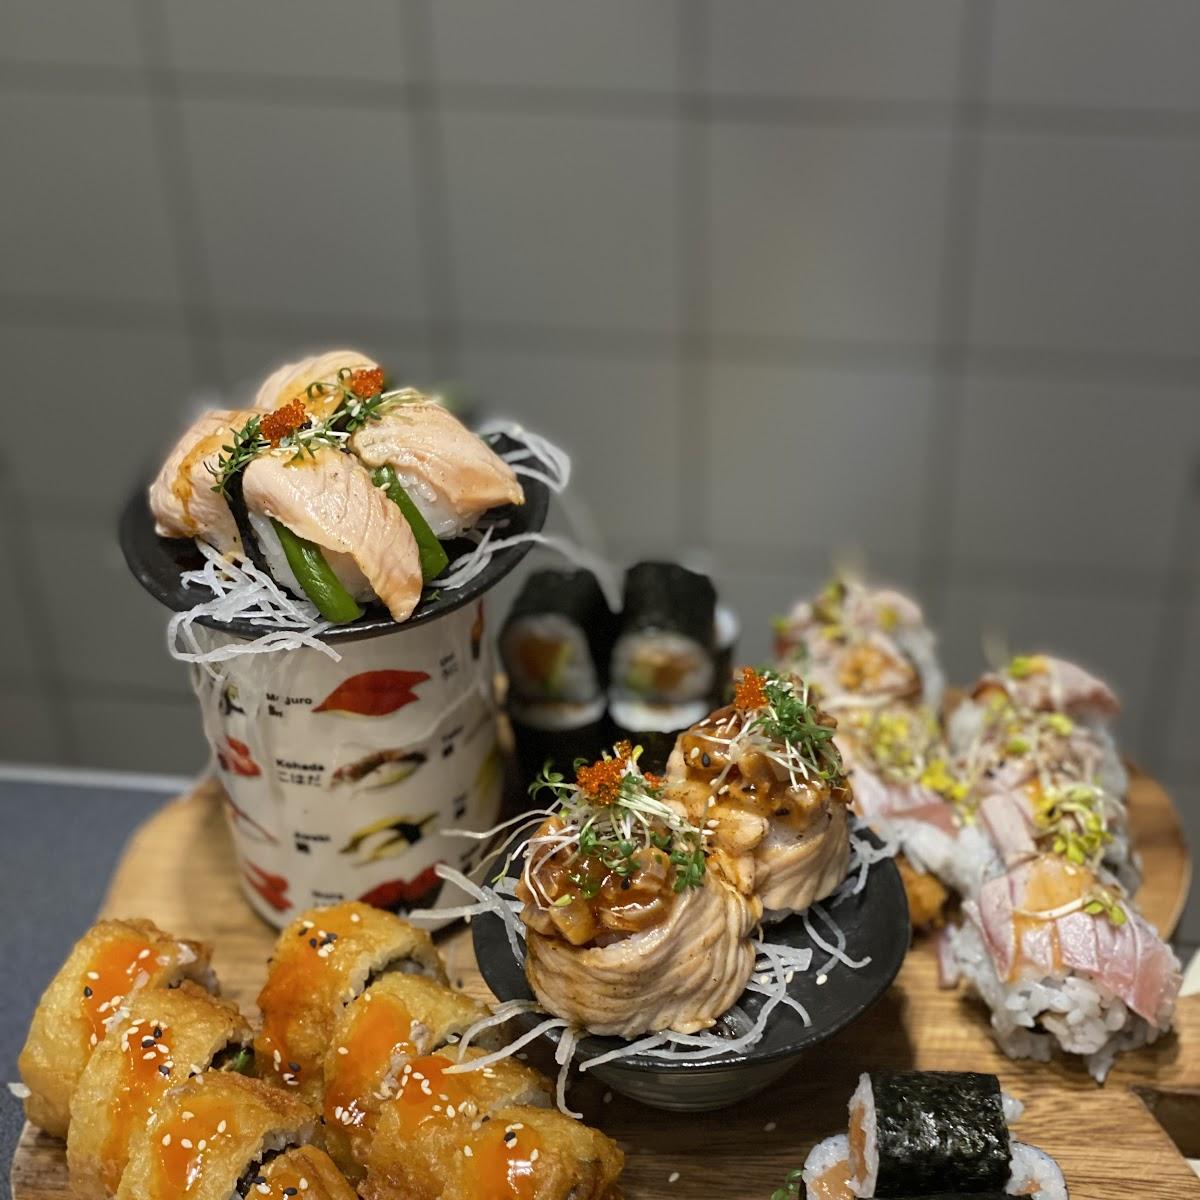 Restaurant "DoHo Sushi" in Berlin